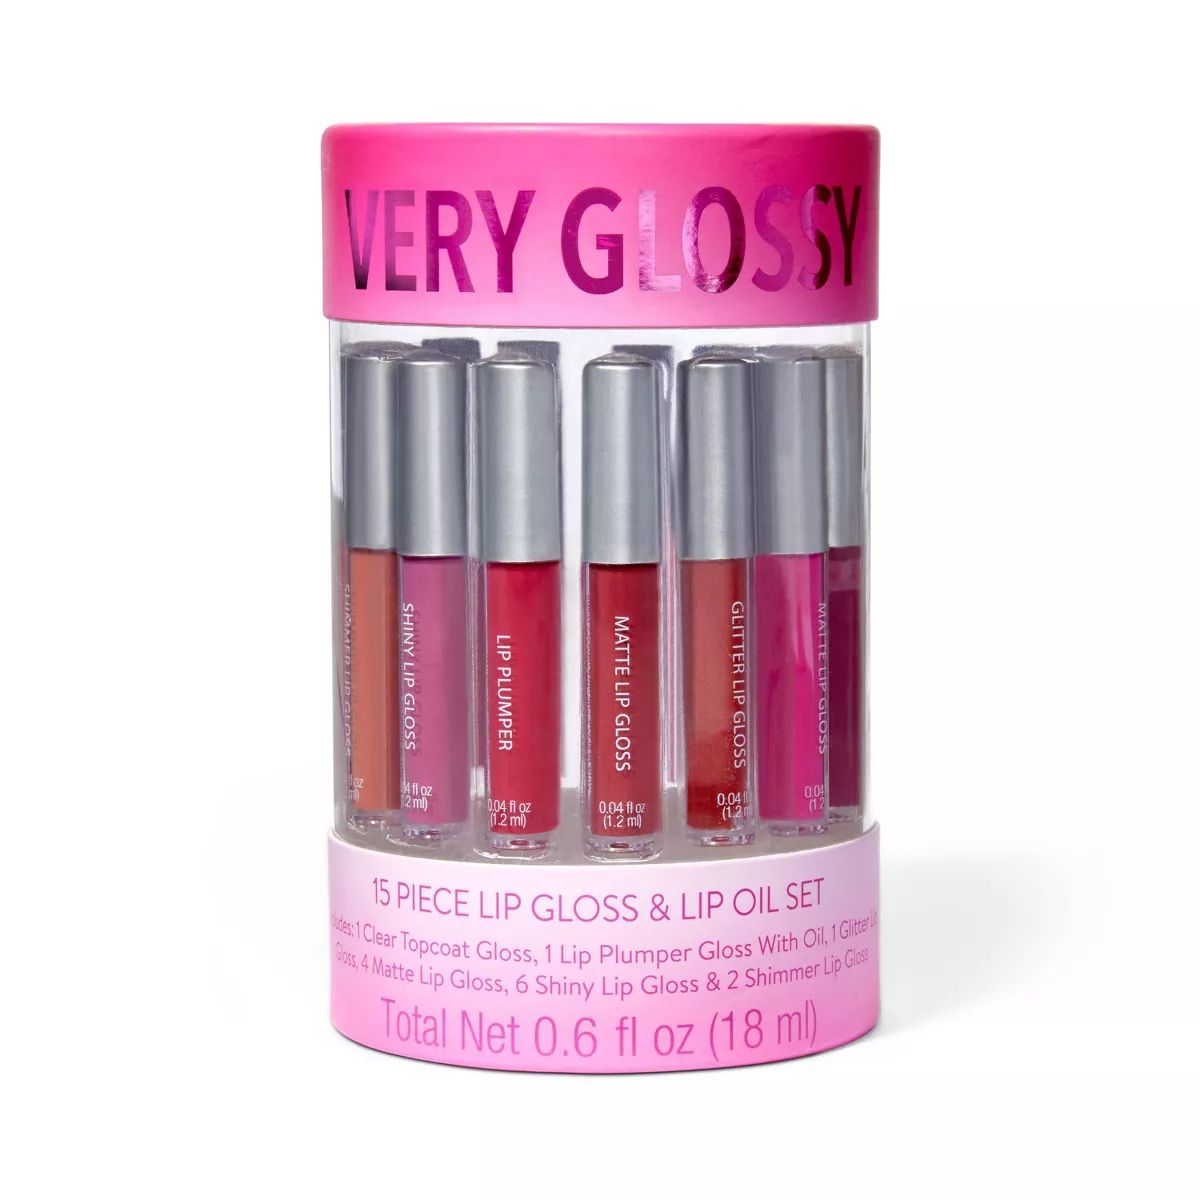 Very Glossy Lip Gloss Gift Set - 0.6 fl oz/15ct | Target